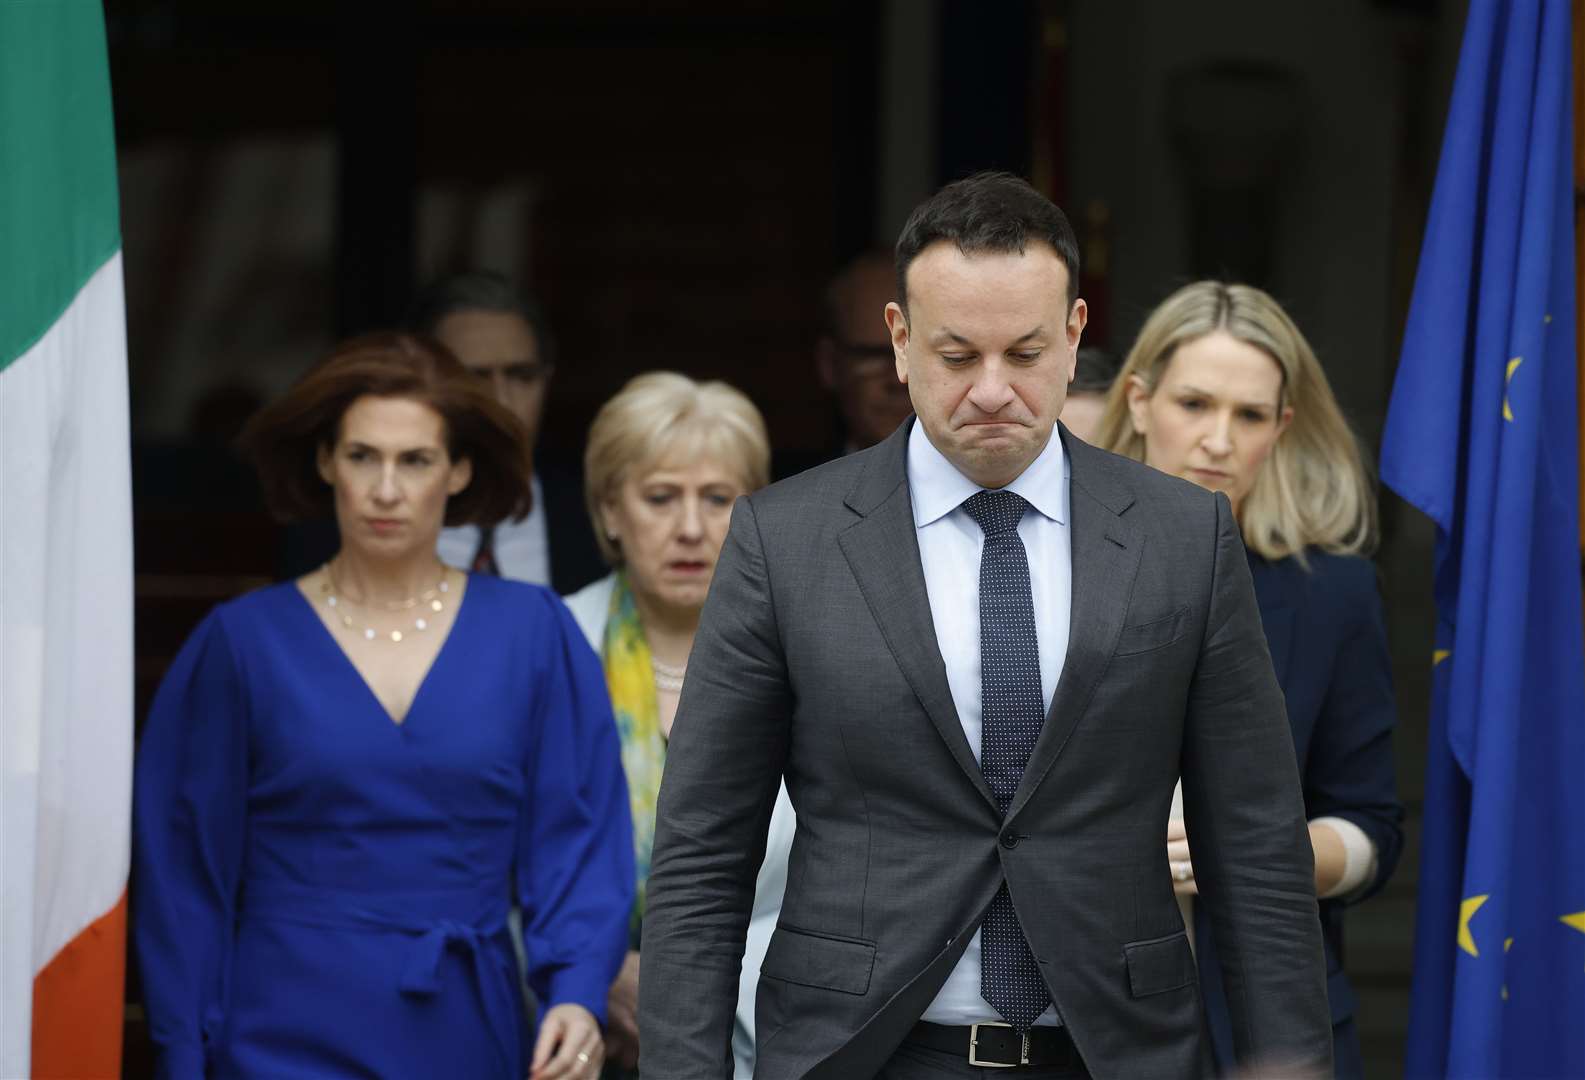 Leo Varadkar announced his resignation as Fine Gael leader and Taoiseach last week (Nick Grimshaw/PA)